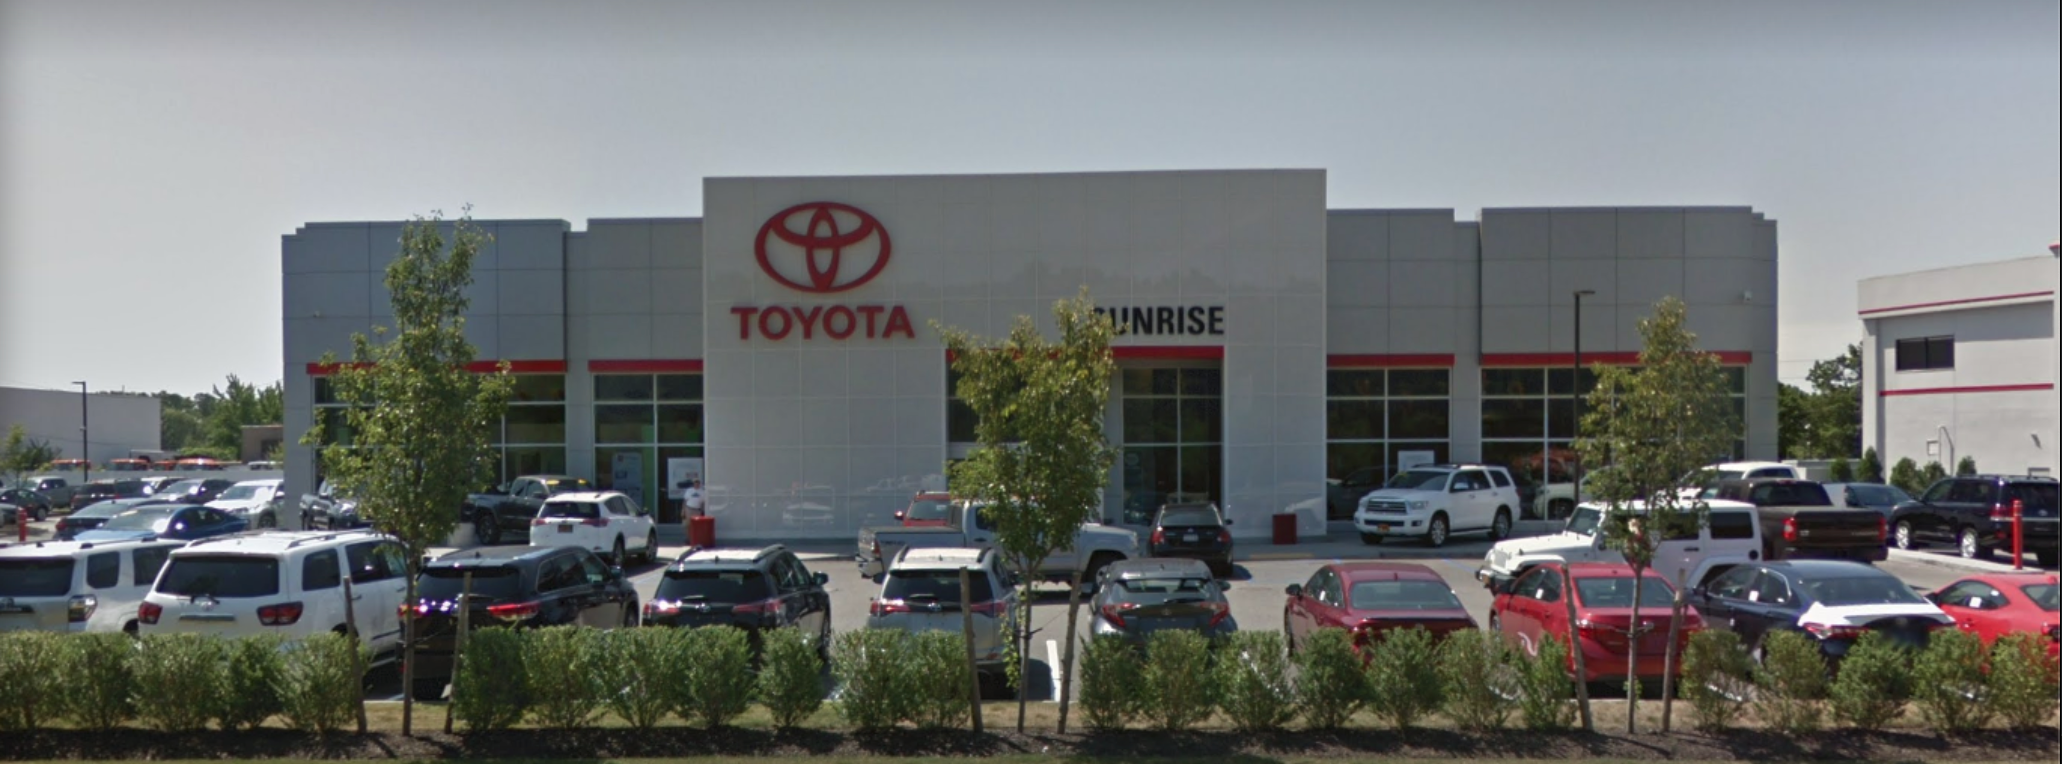 Sunrise Toyota Dealership